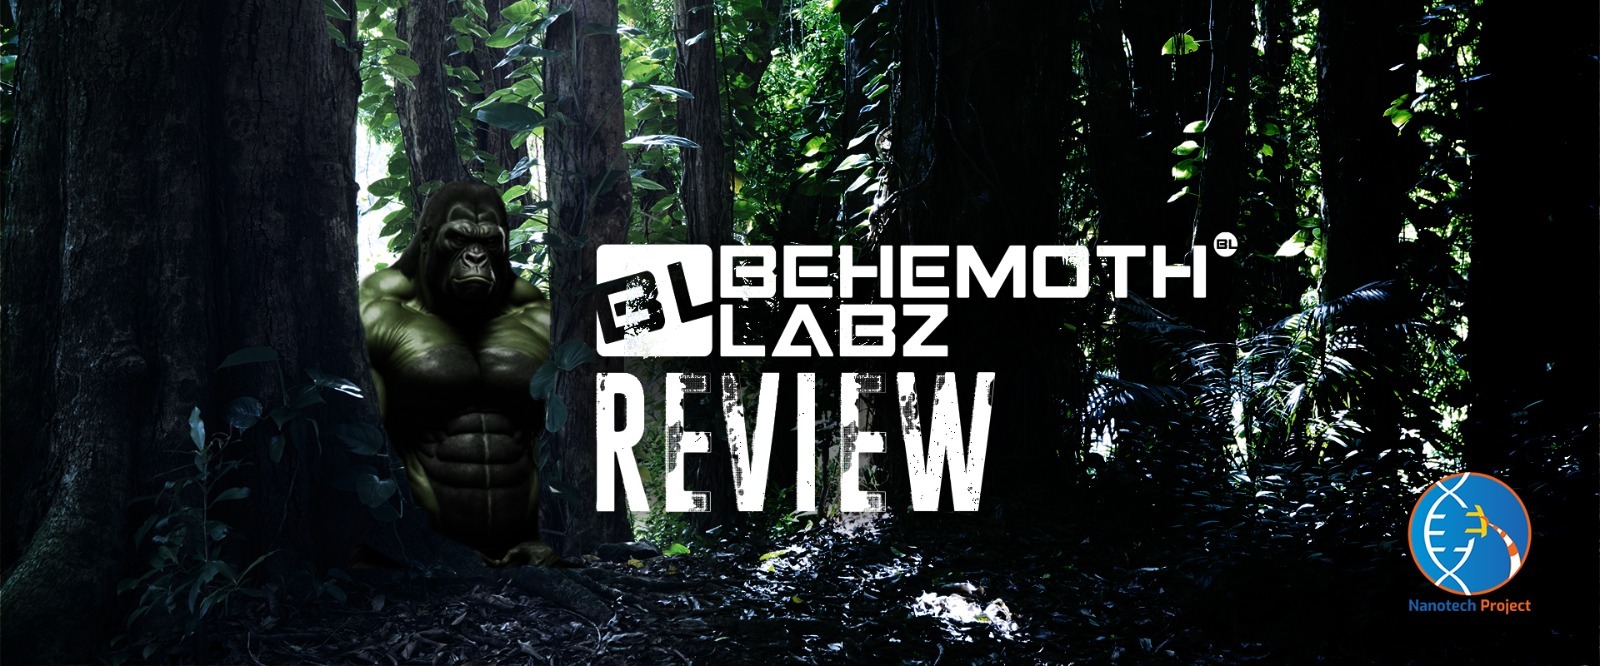 BehemothLabz Review